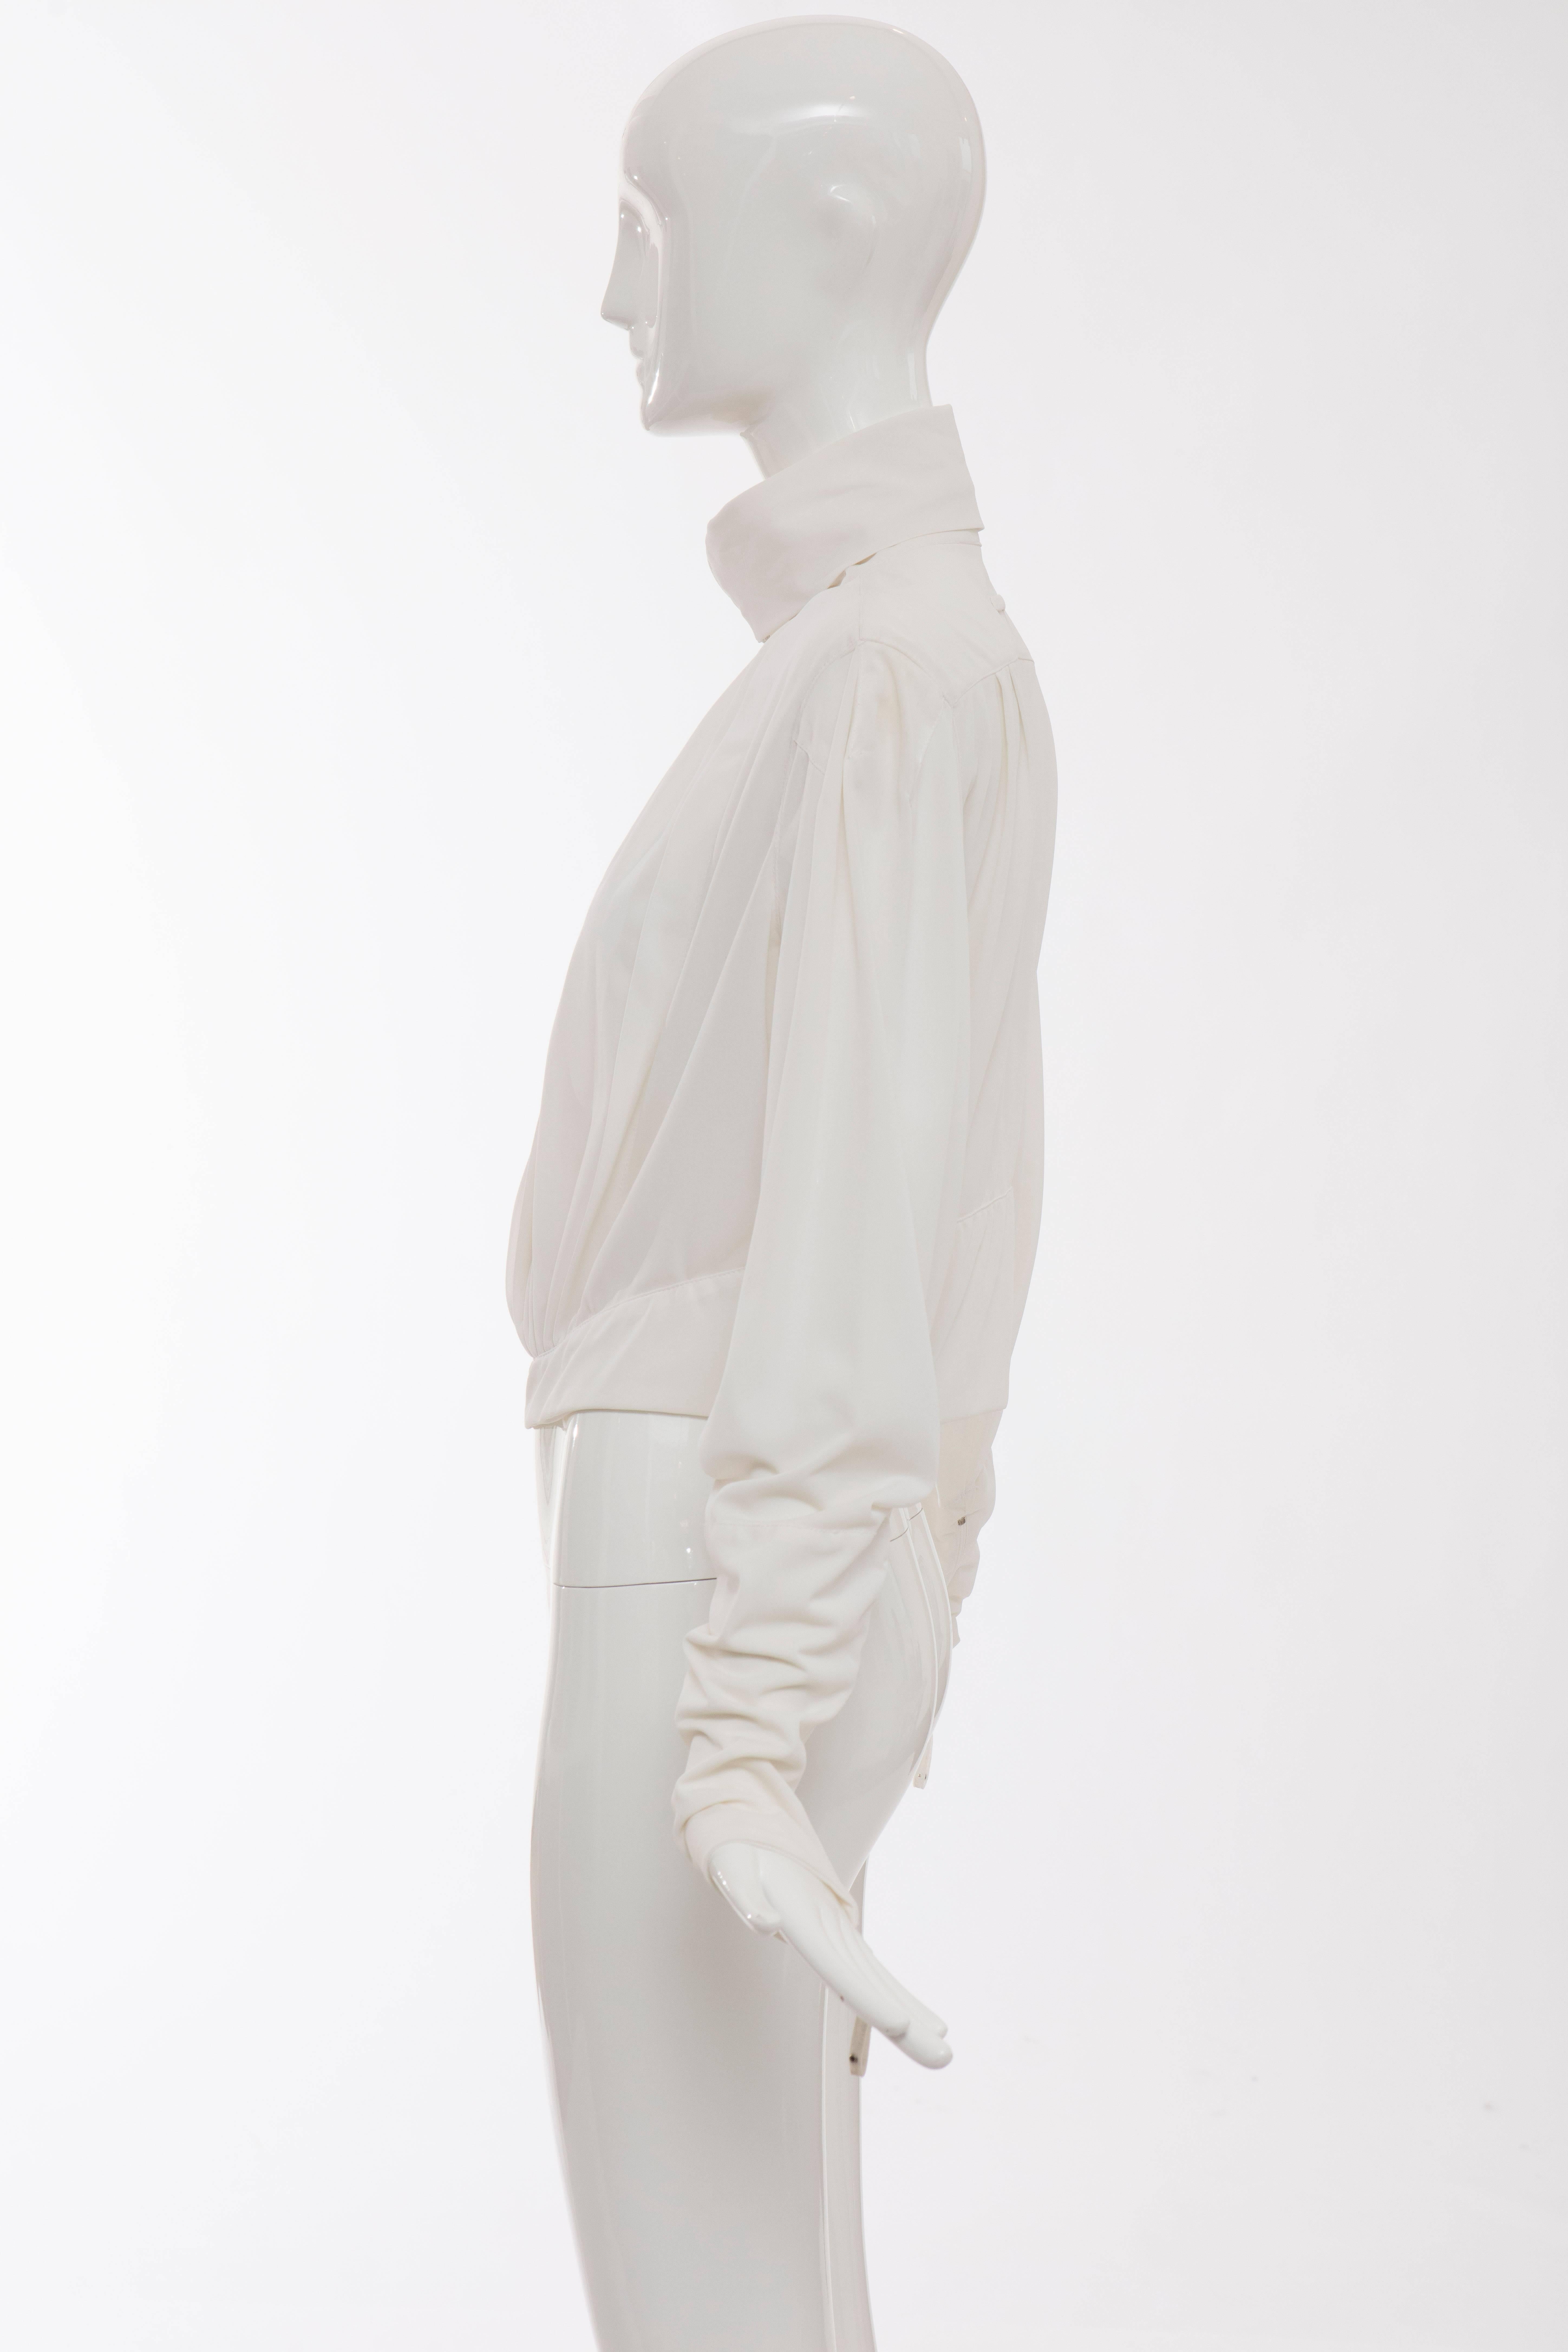 Jean Paul Gaultier White Nylon Zip Front Jacket, Circa 1990s For Sale 3